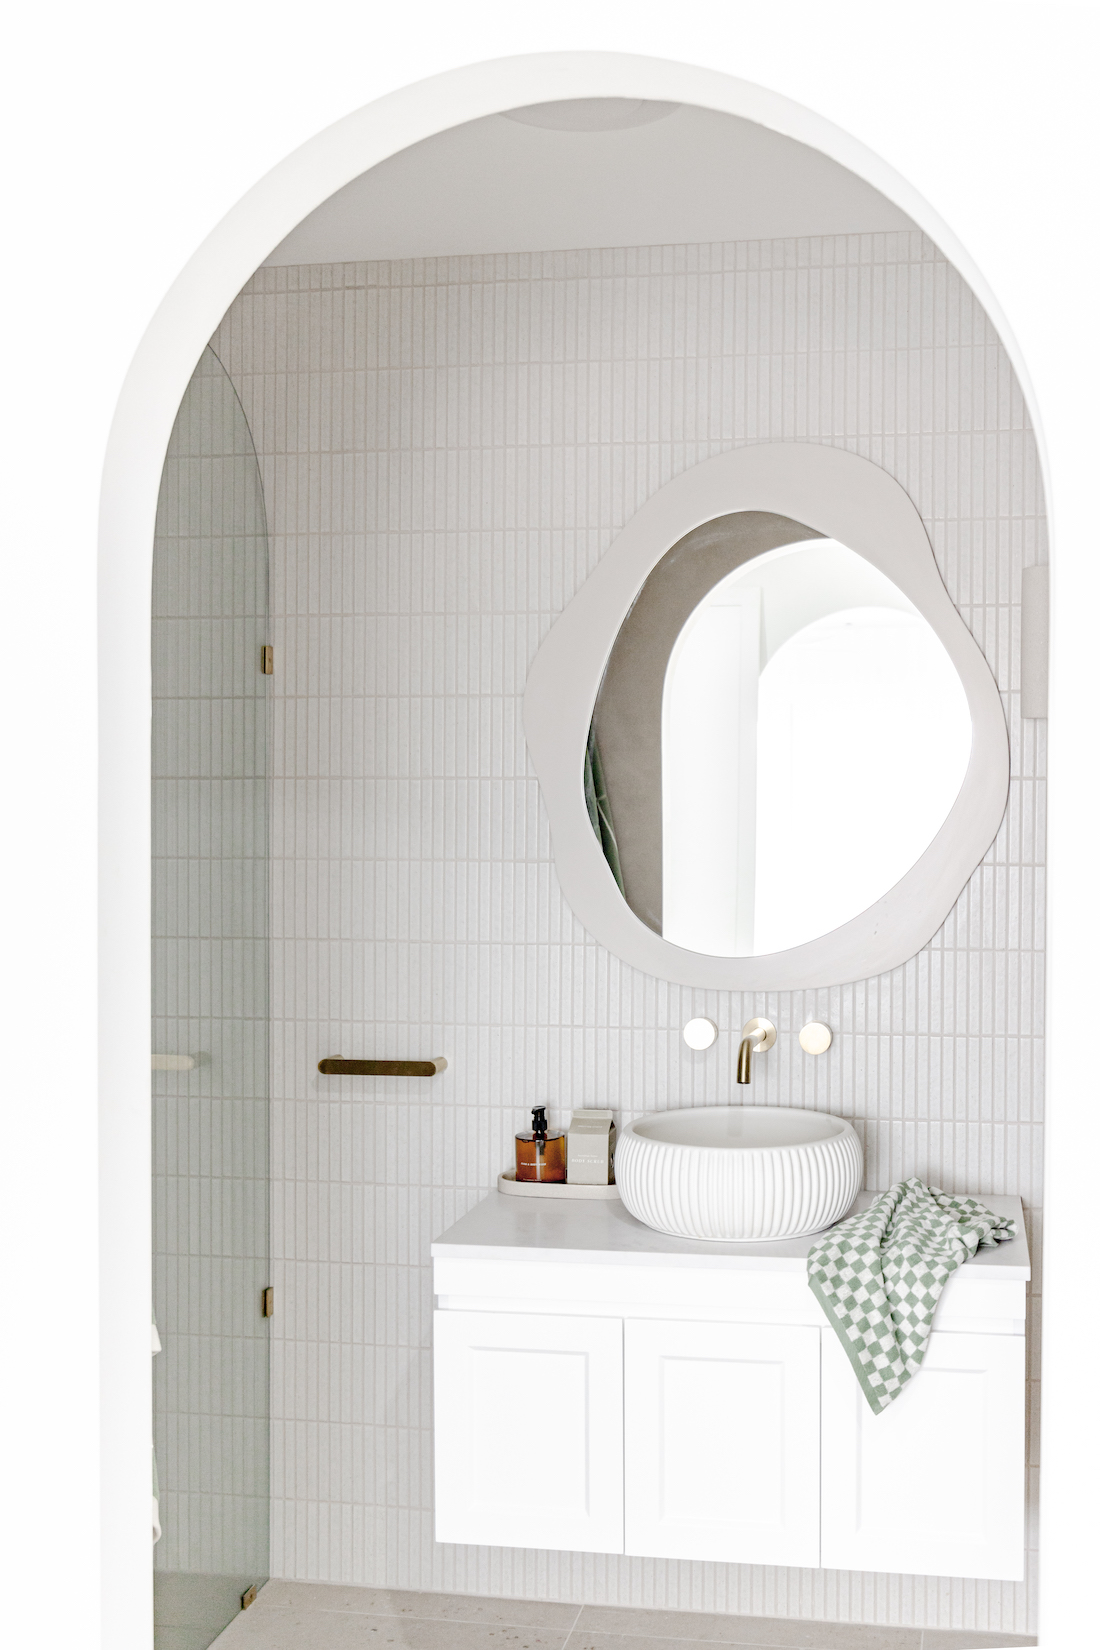 Curved doorway to white kitkat tile bathroom